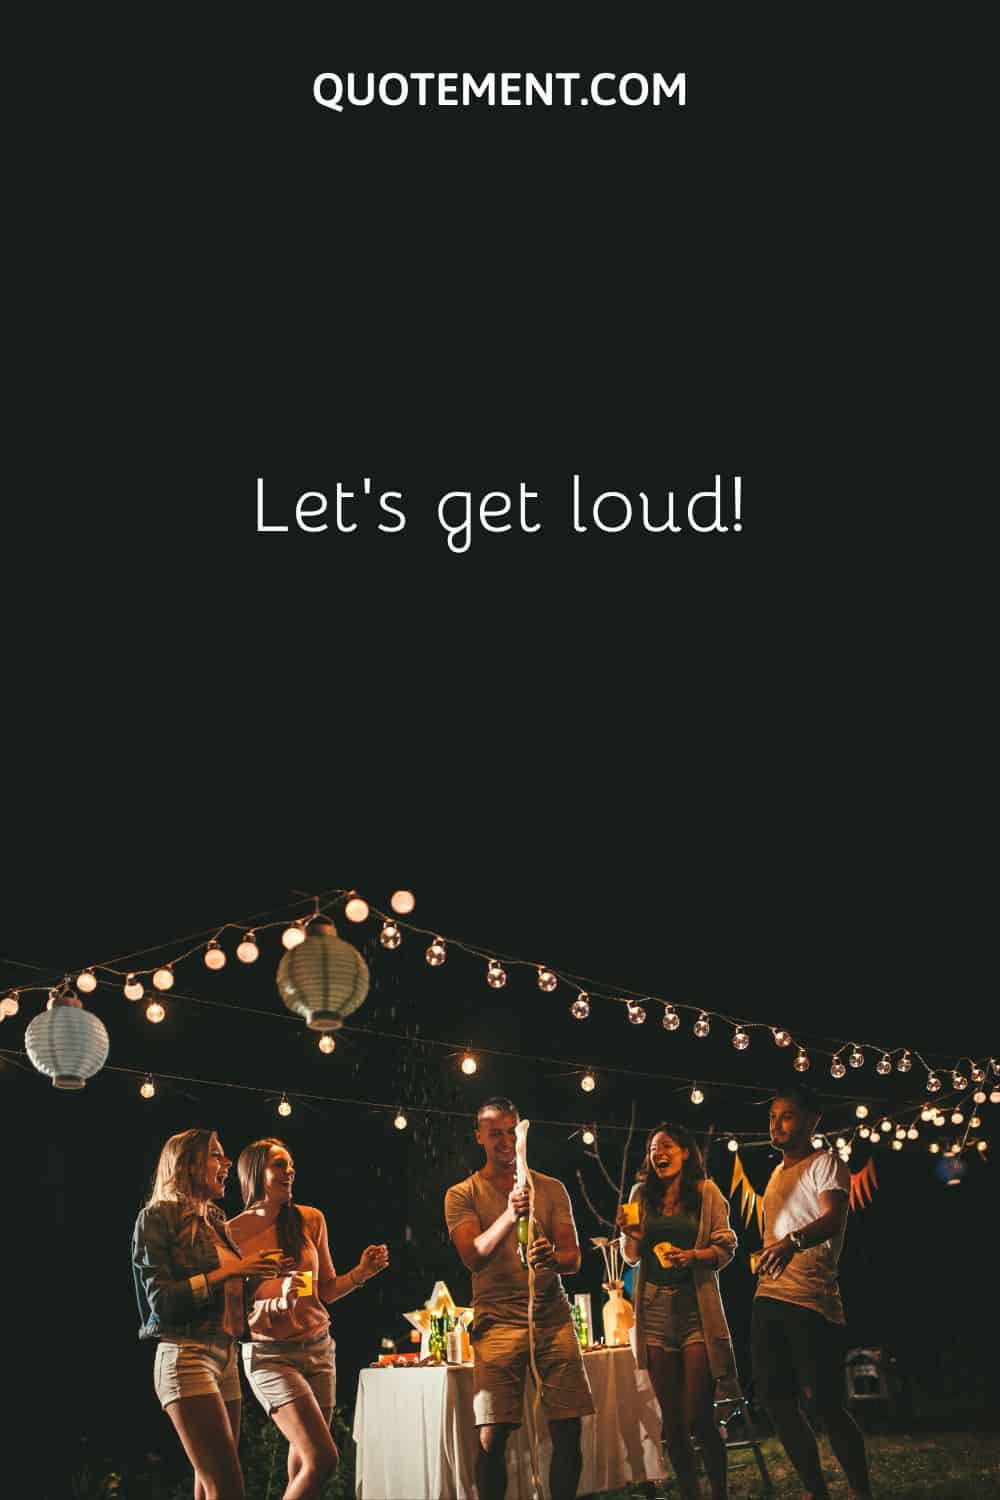 Let’s get loud